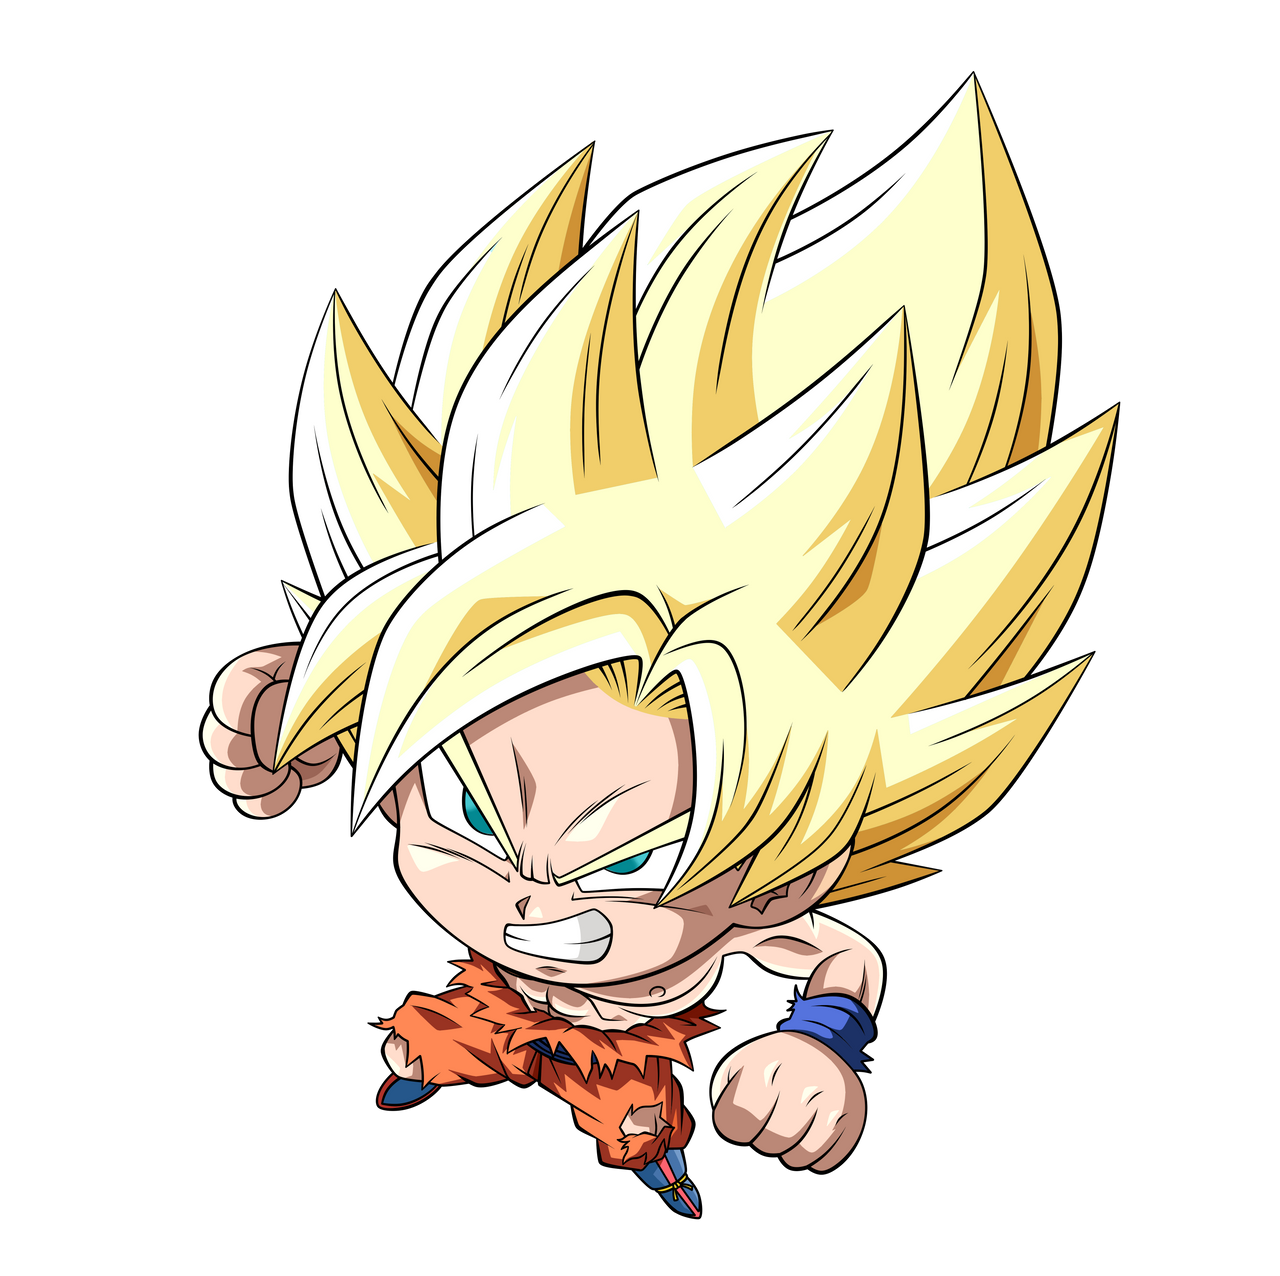 Goku SSJ Chibi (Dragon Ball Z) para colorir by PoccnnIndustriesPT on  DeviantArt